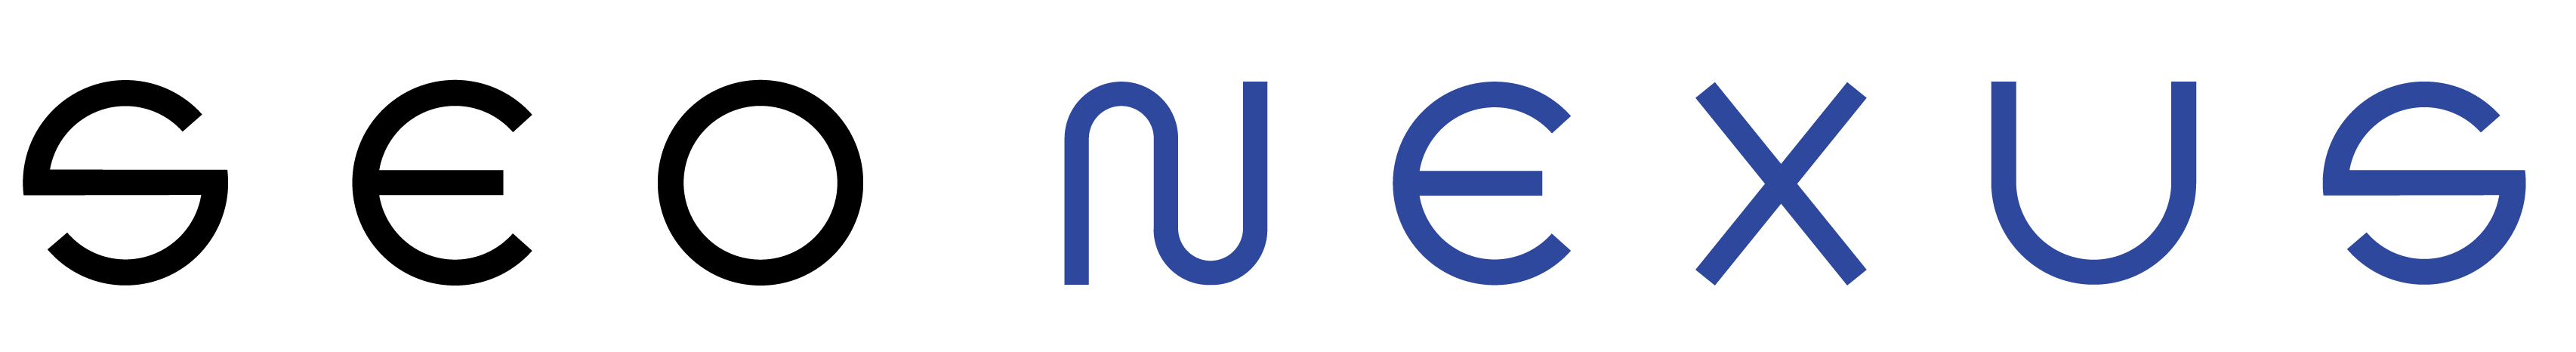 Top Search Engine Optimization Firm Logo: SEO Nexus